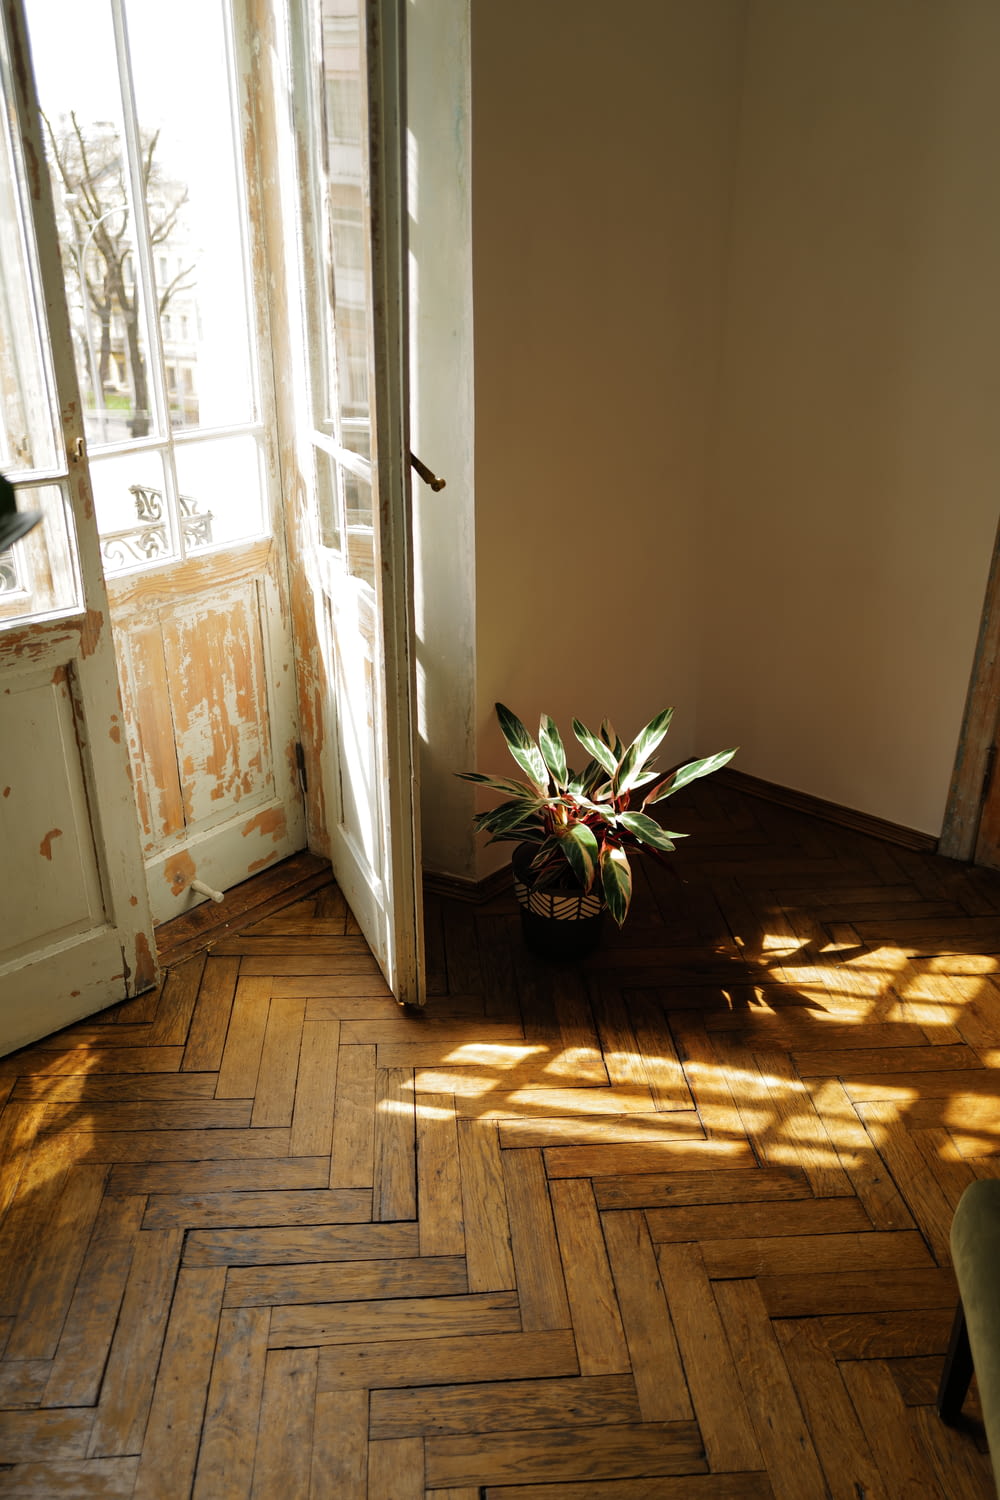 green plant on brown wooden floor